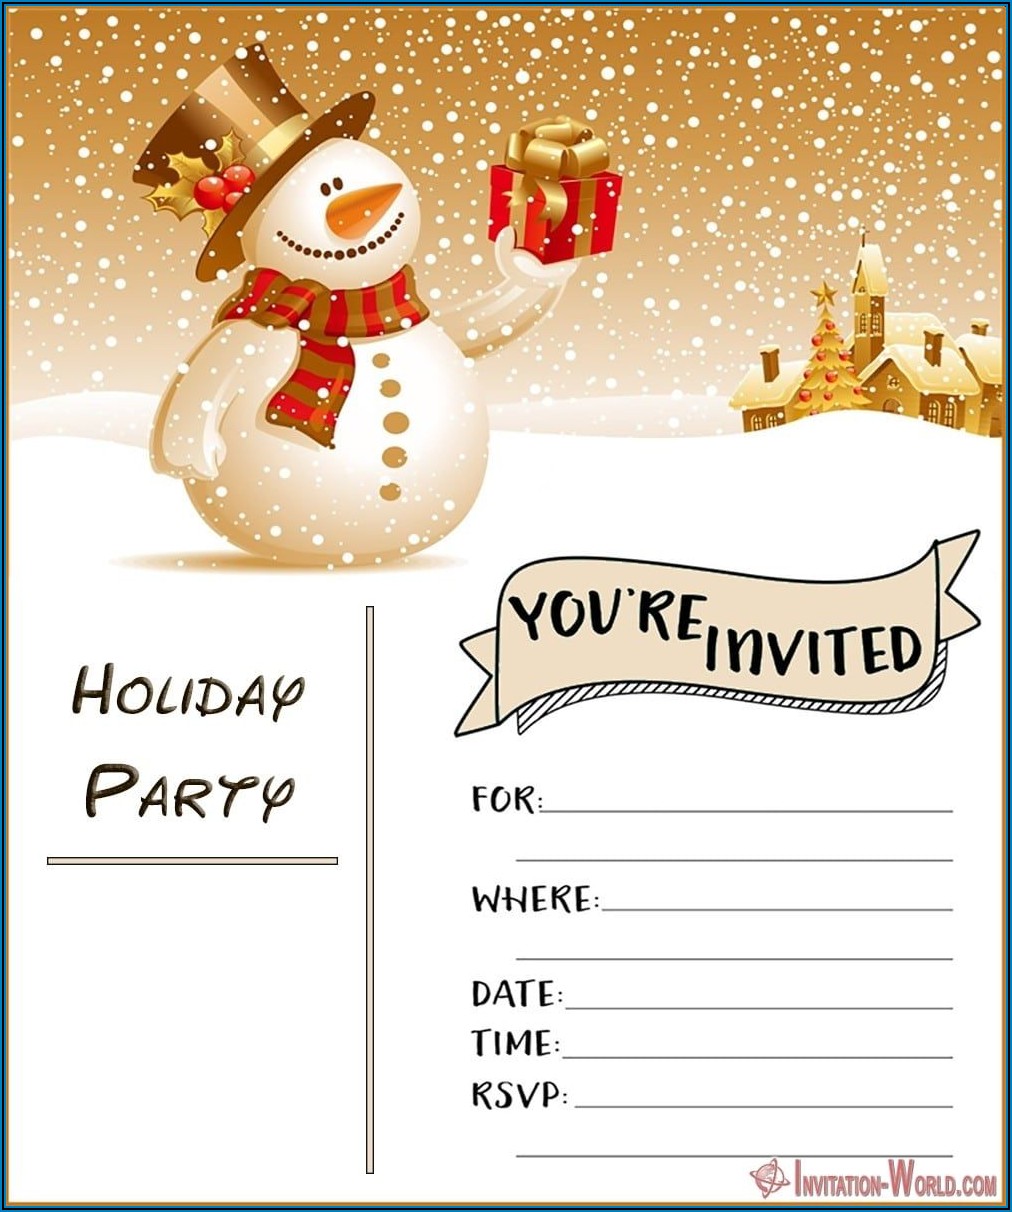 Free Printable Christmas Party Invitation Templates